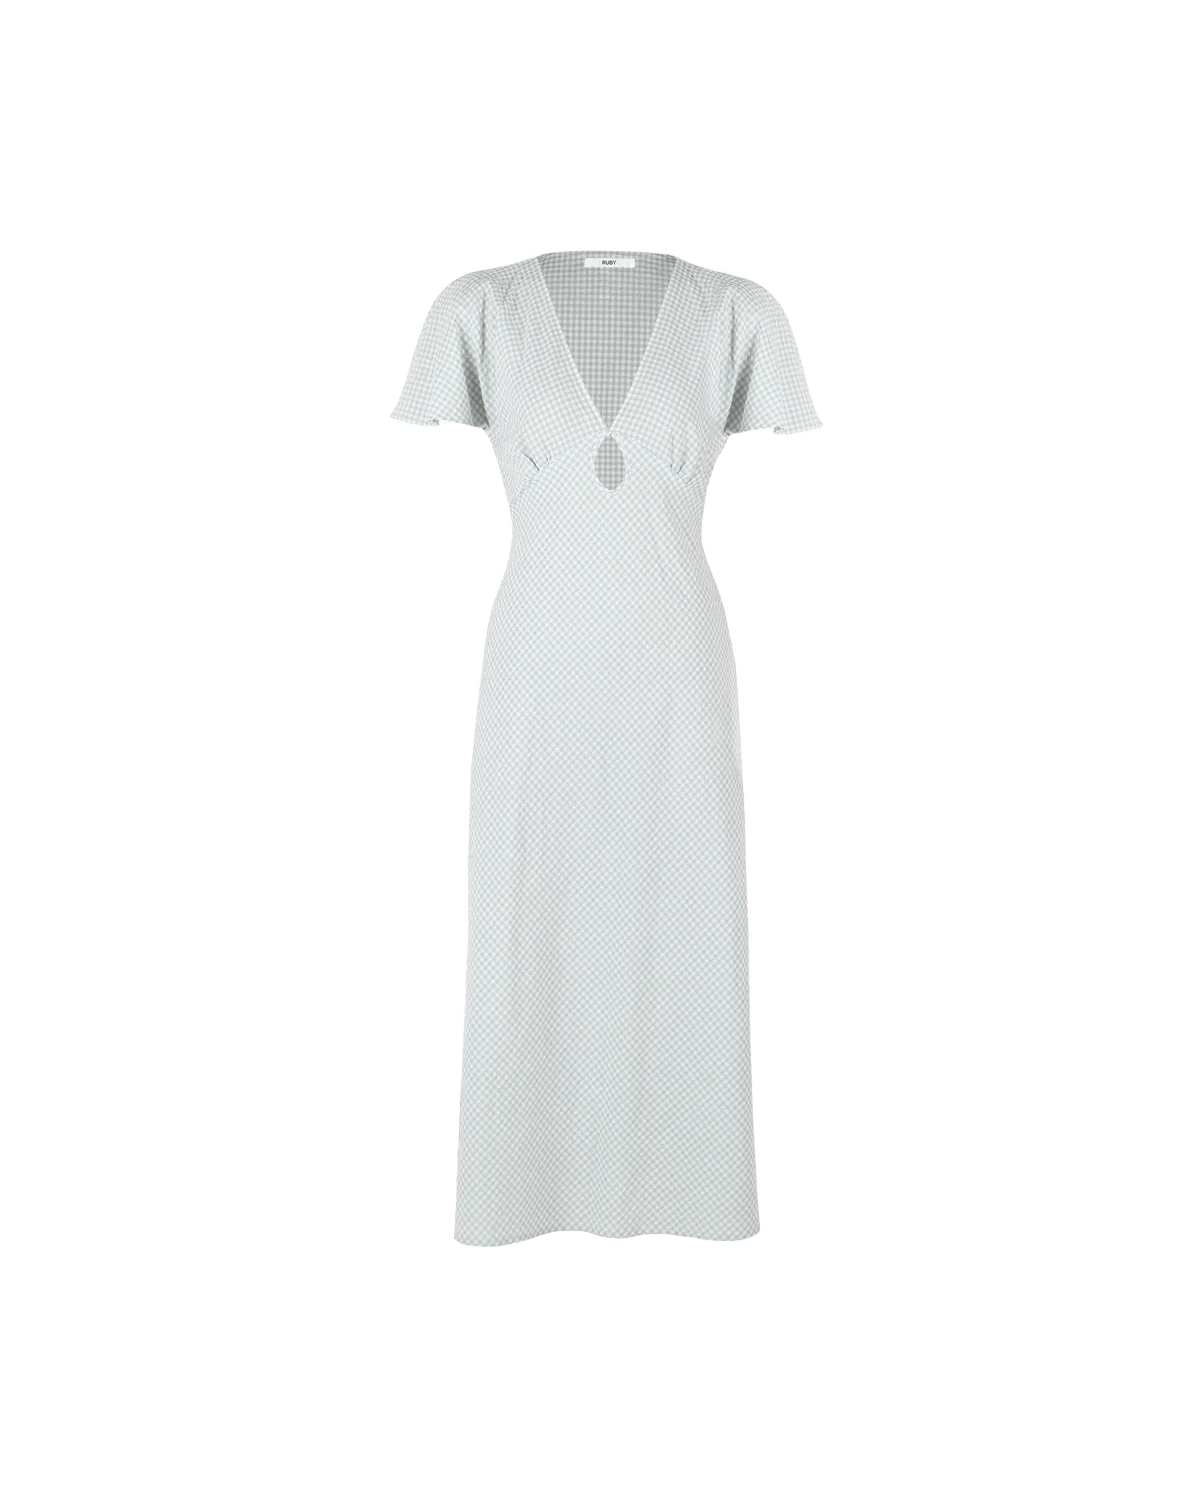 RUBY Clover Dress - Size 20 - Love & Lend